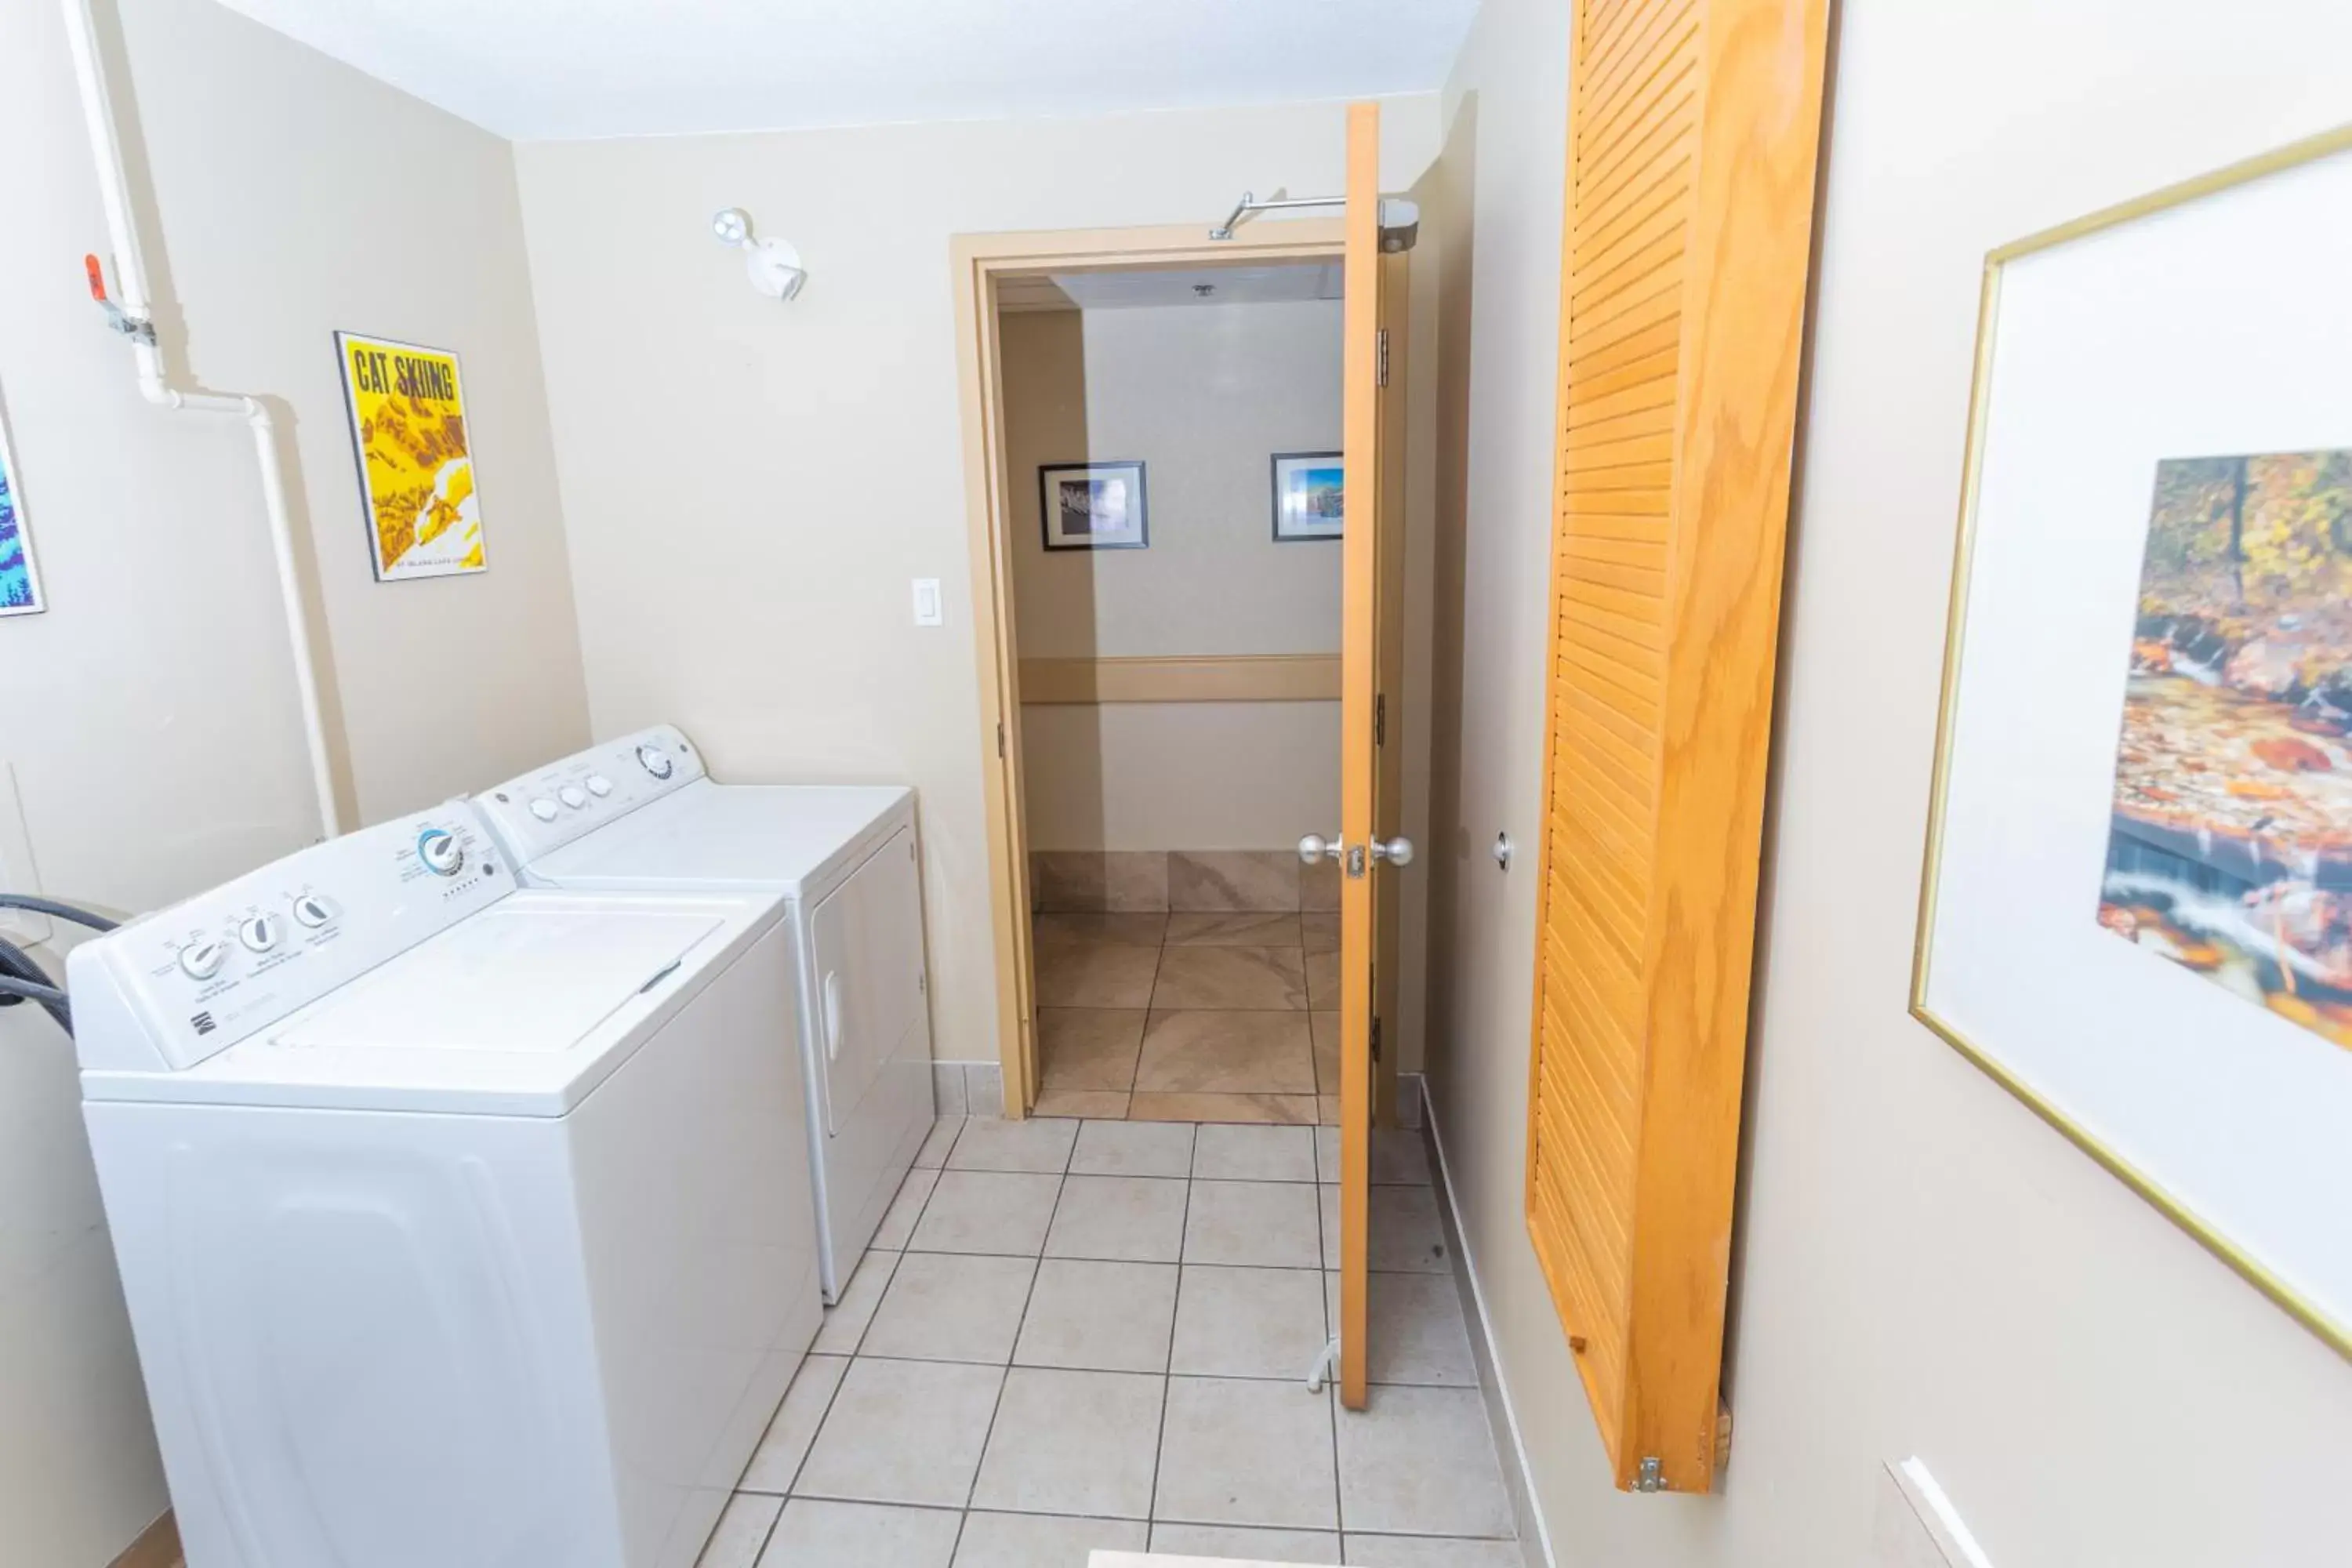 Area and facilities, Bathroom in Fernie Fox Hotel